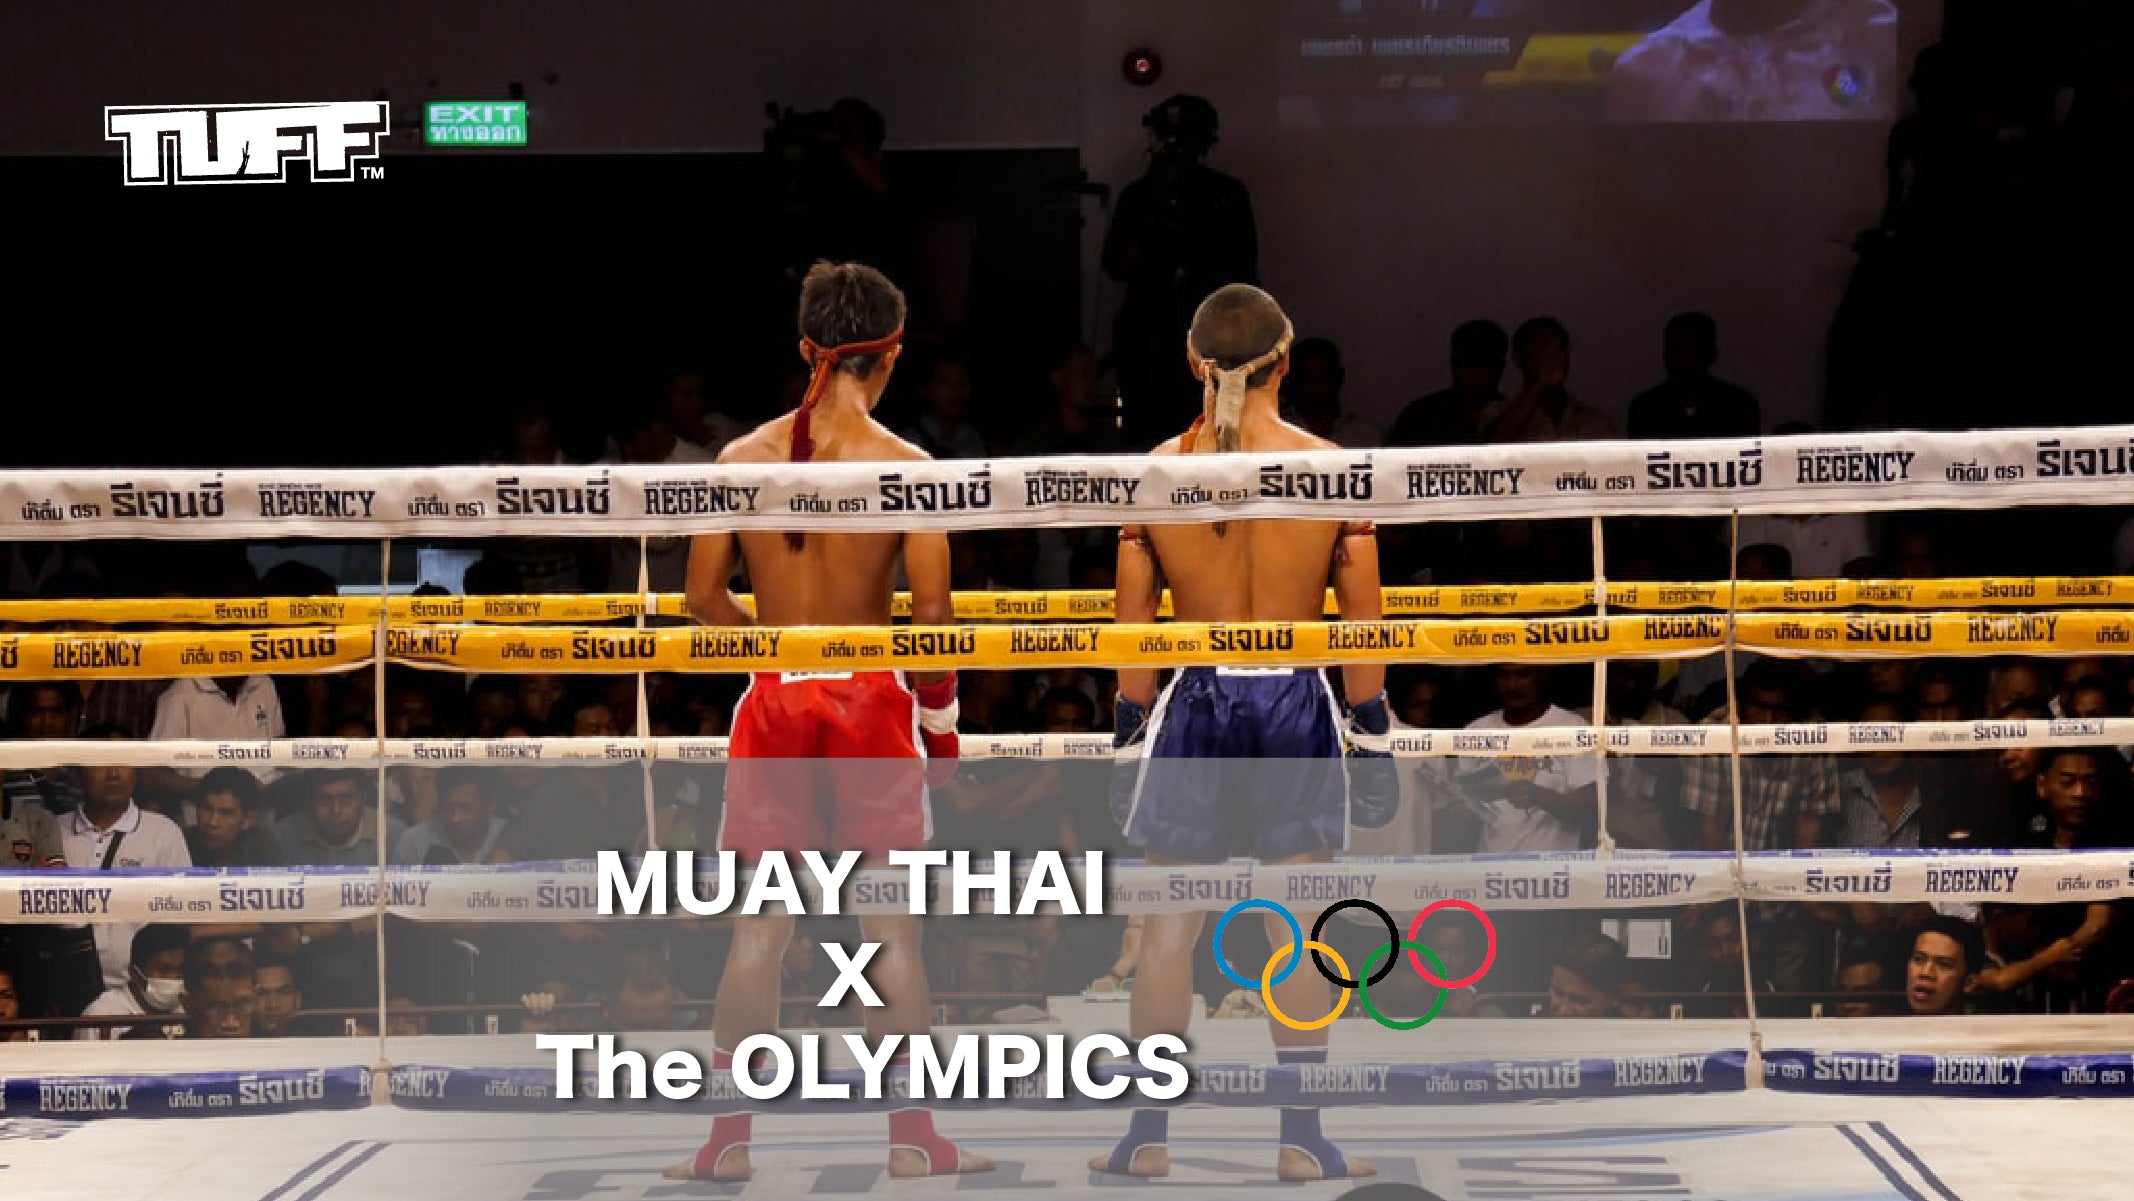 Muay Thai & The Olympics